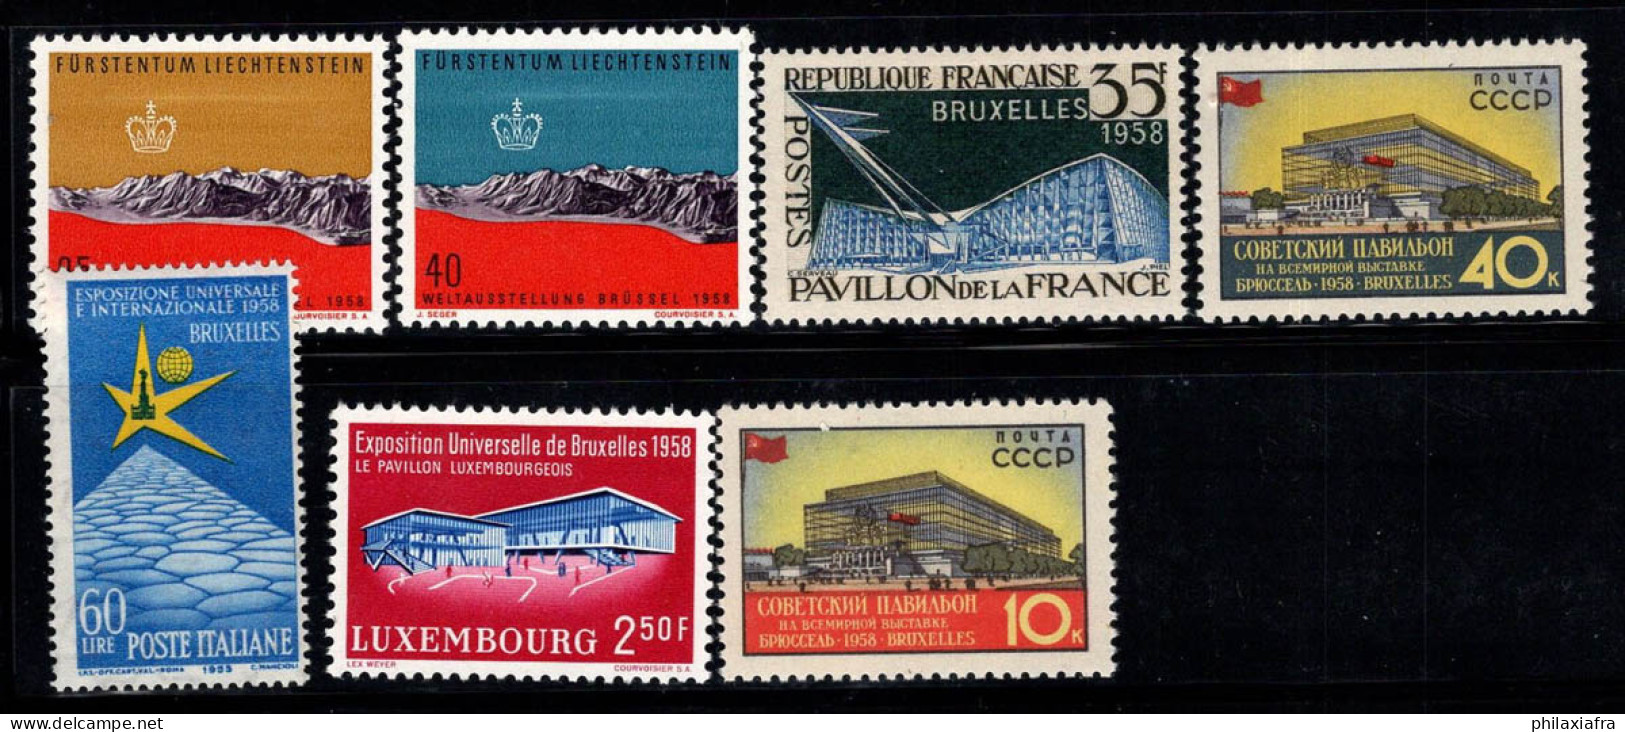 Expositions Universelles Bruxelles 1958 Neuf ** 100% France, Luxembourg, Italie - 1958 – Bruxelles (Belgique)